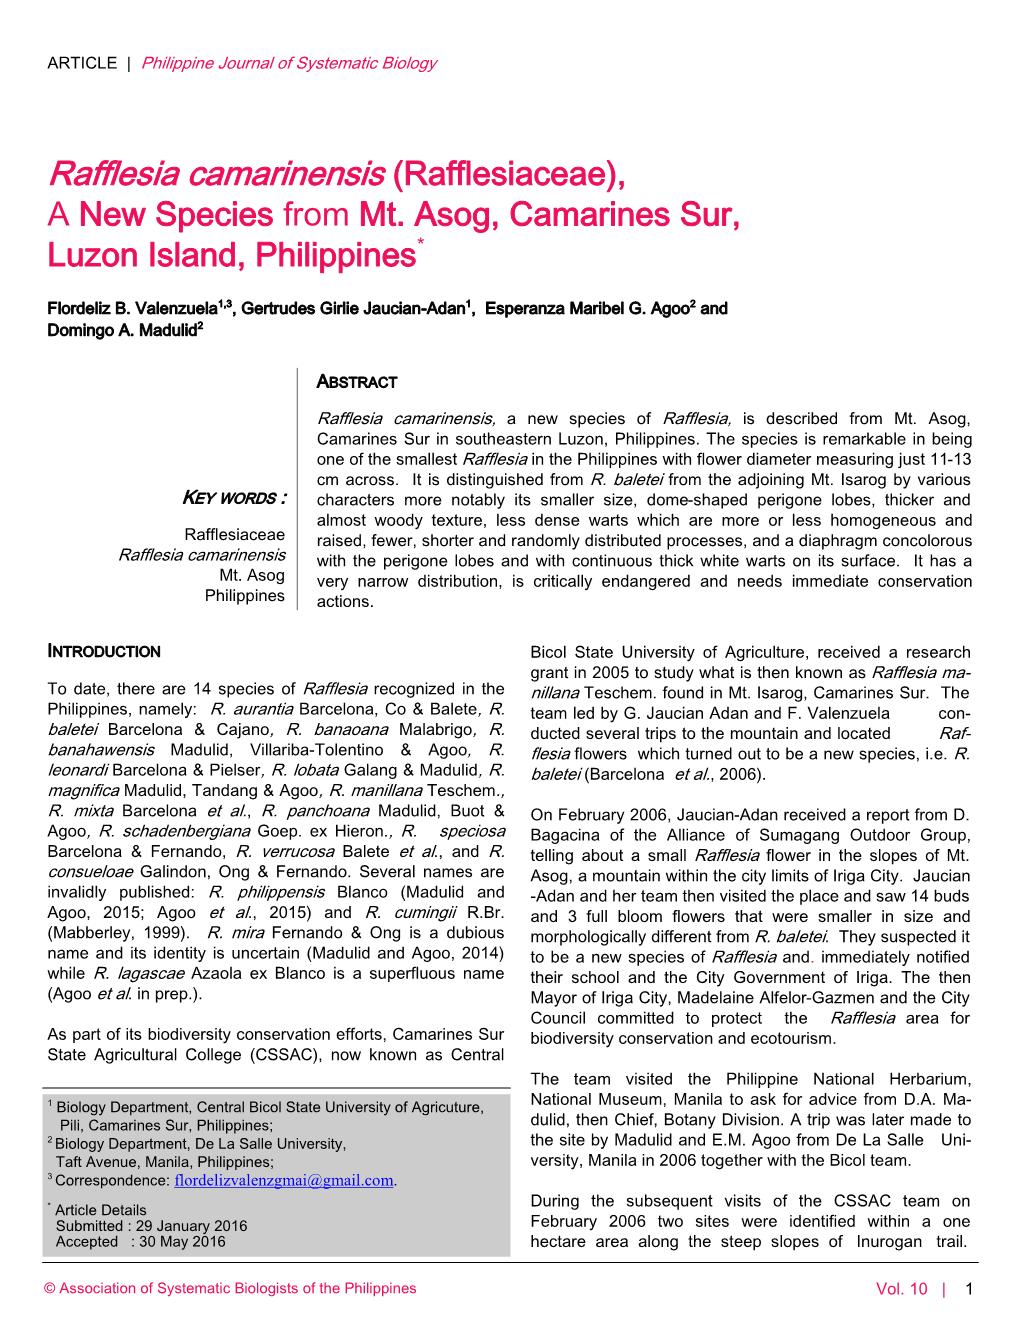 Rafflesia Camarinensis (Rafflesiaceae), a New Species from Mt